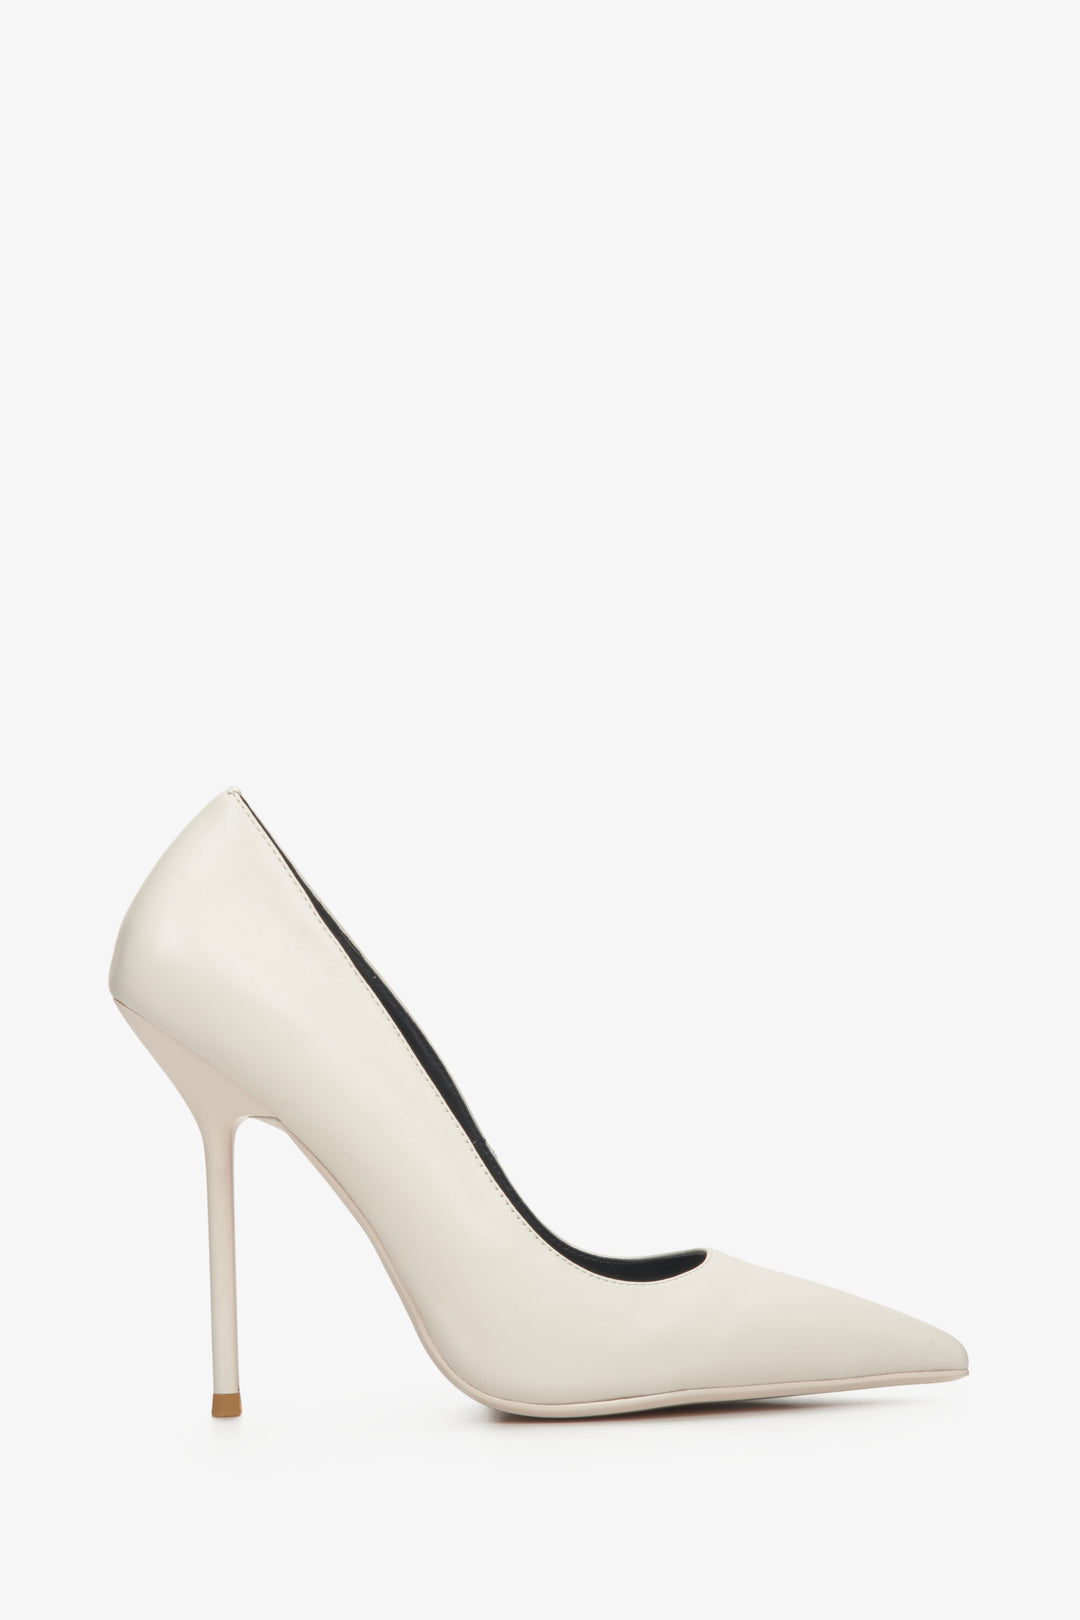 Women's white leather stiletto heels Estro - shoe profile.